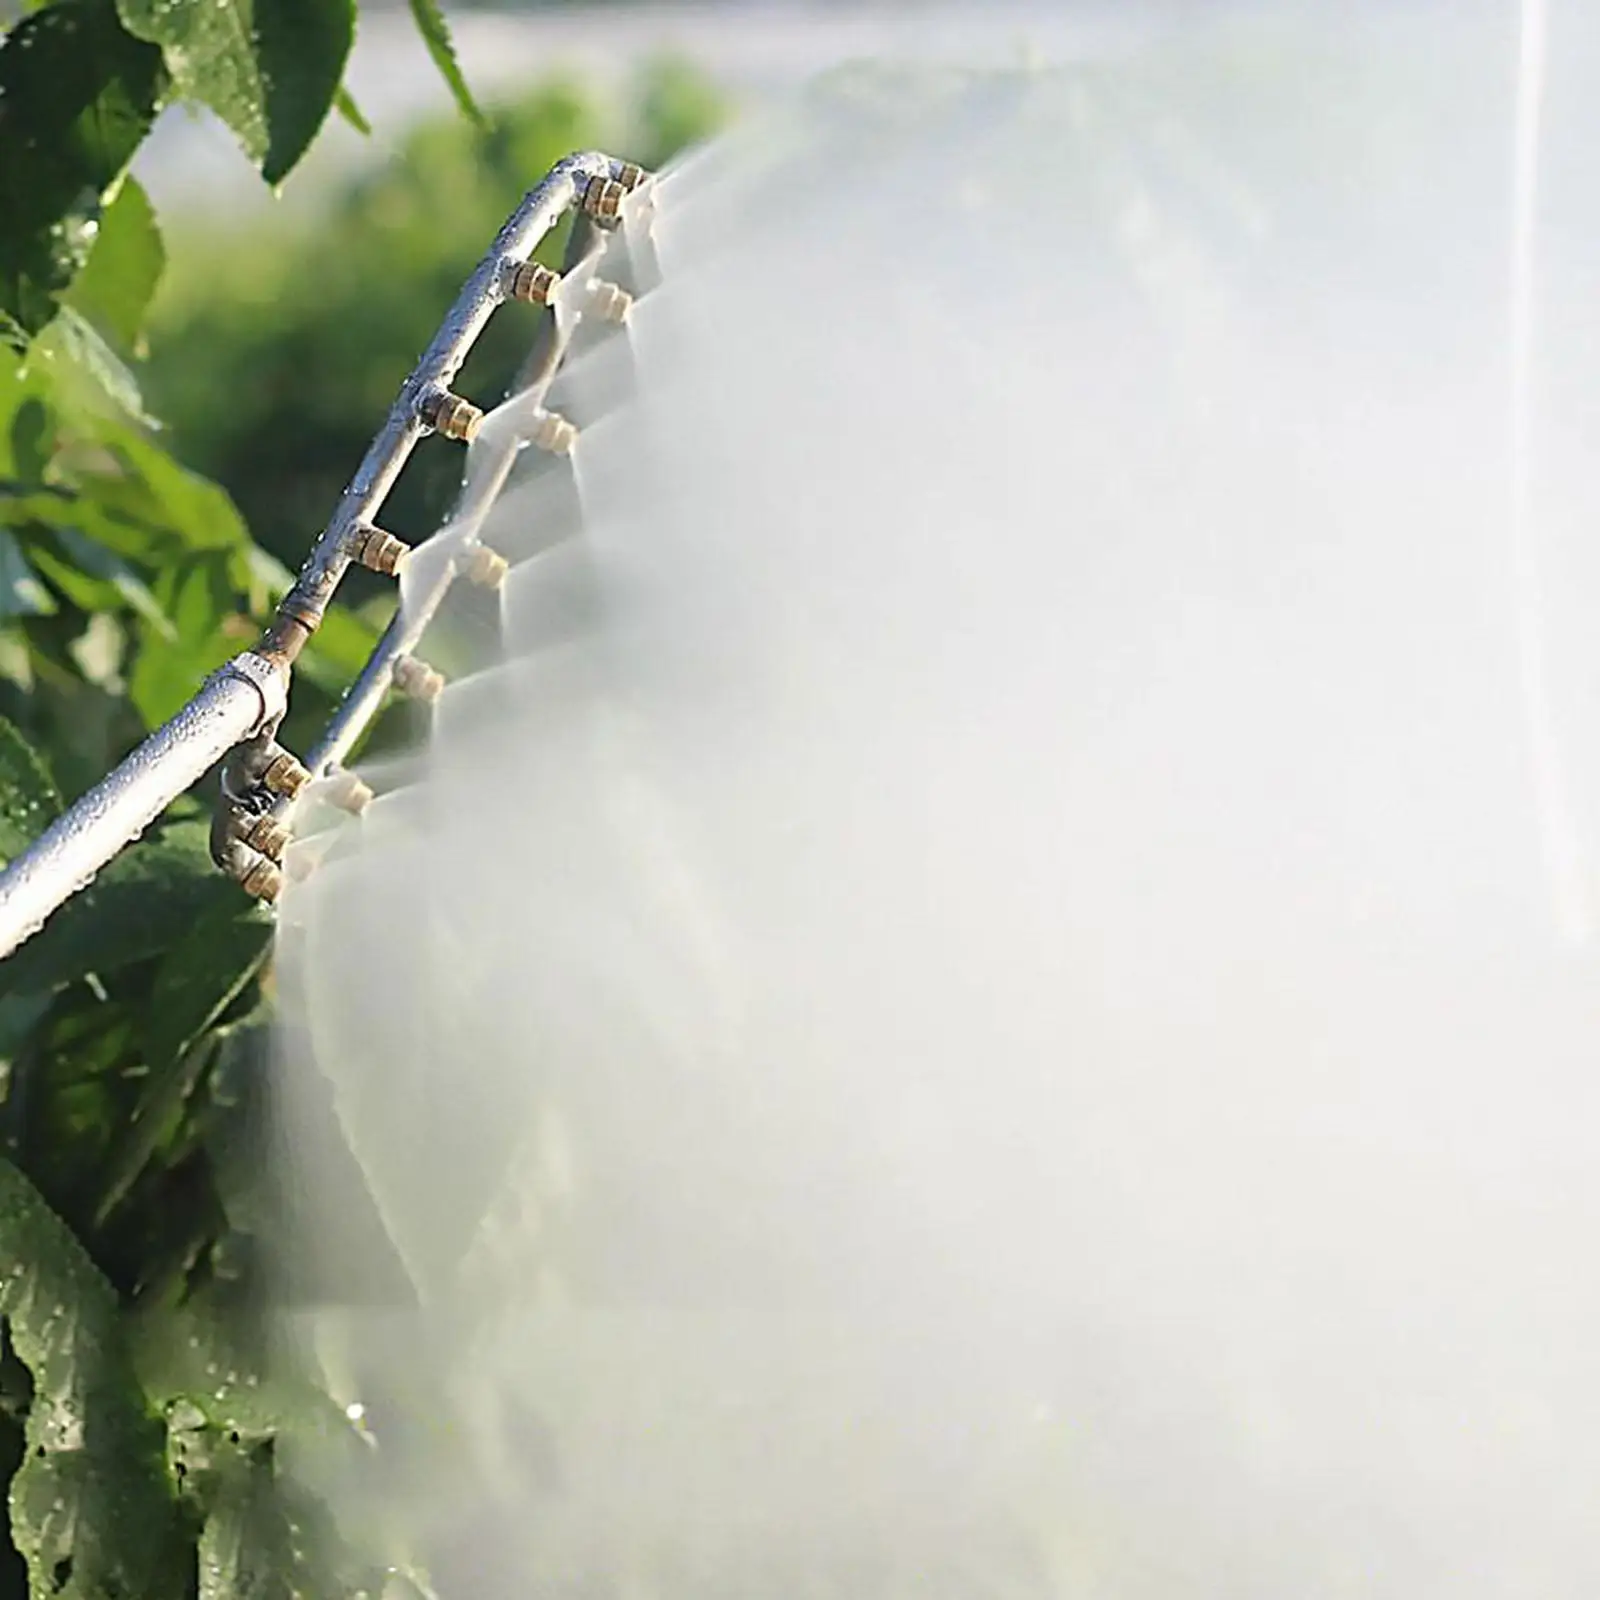 Water Sprinkler Watering Sprayer Sprinkler Nozzle Garden Watering Tool Garden Sprayer for Agriculture Greenhouse Watering